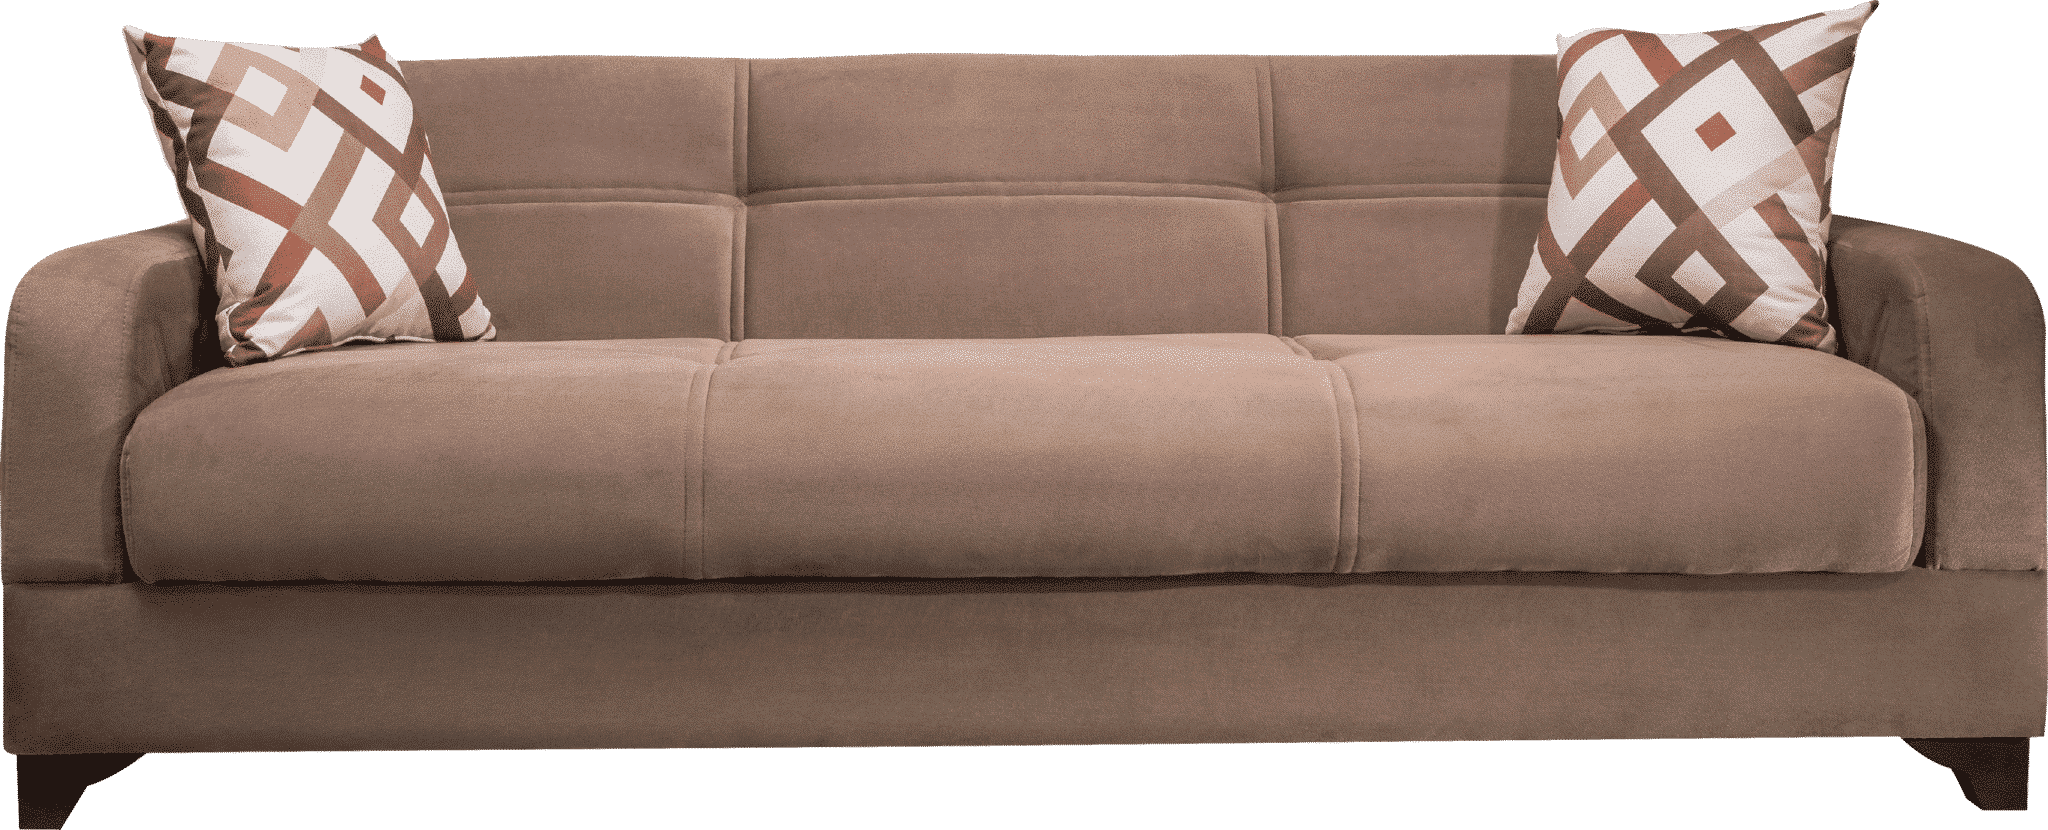 Sofa Bed Smart Furniture